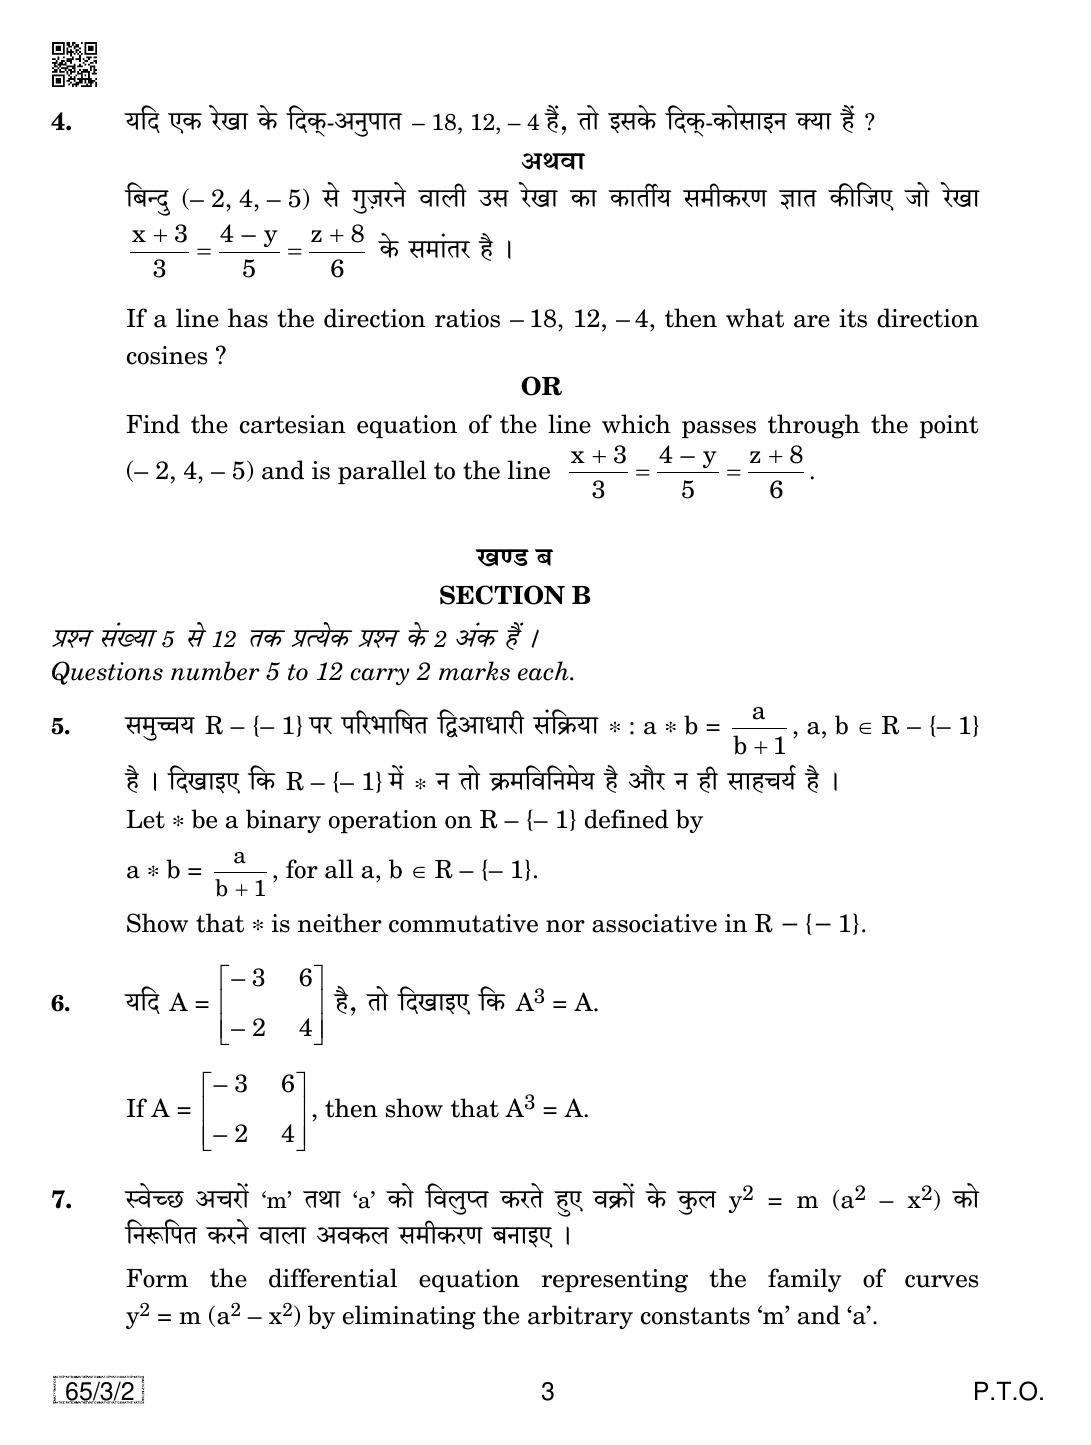 CBSE Class 12 65-3-2 Mathematics 2019 Question Paper - Page 3